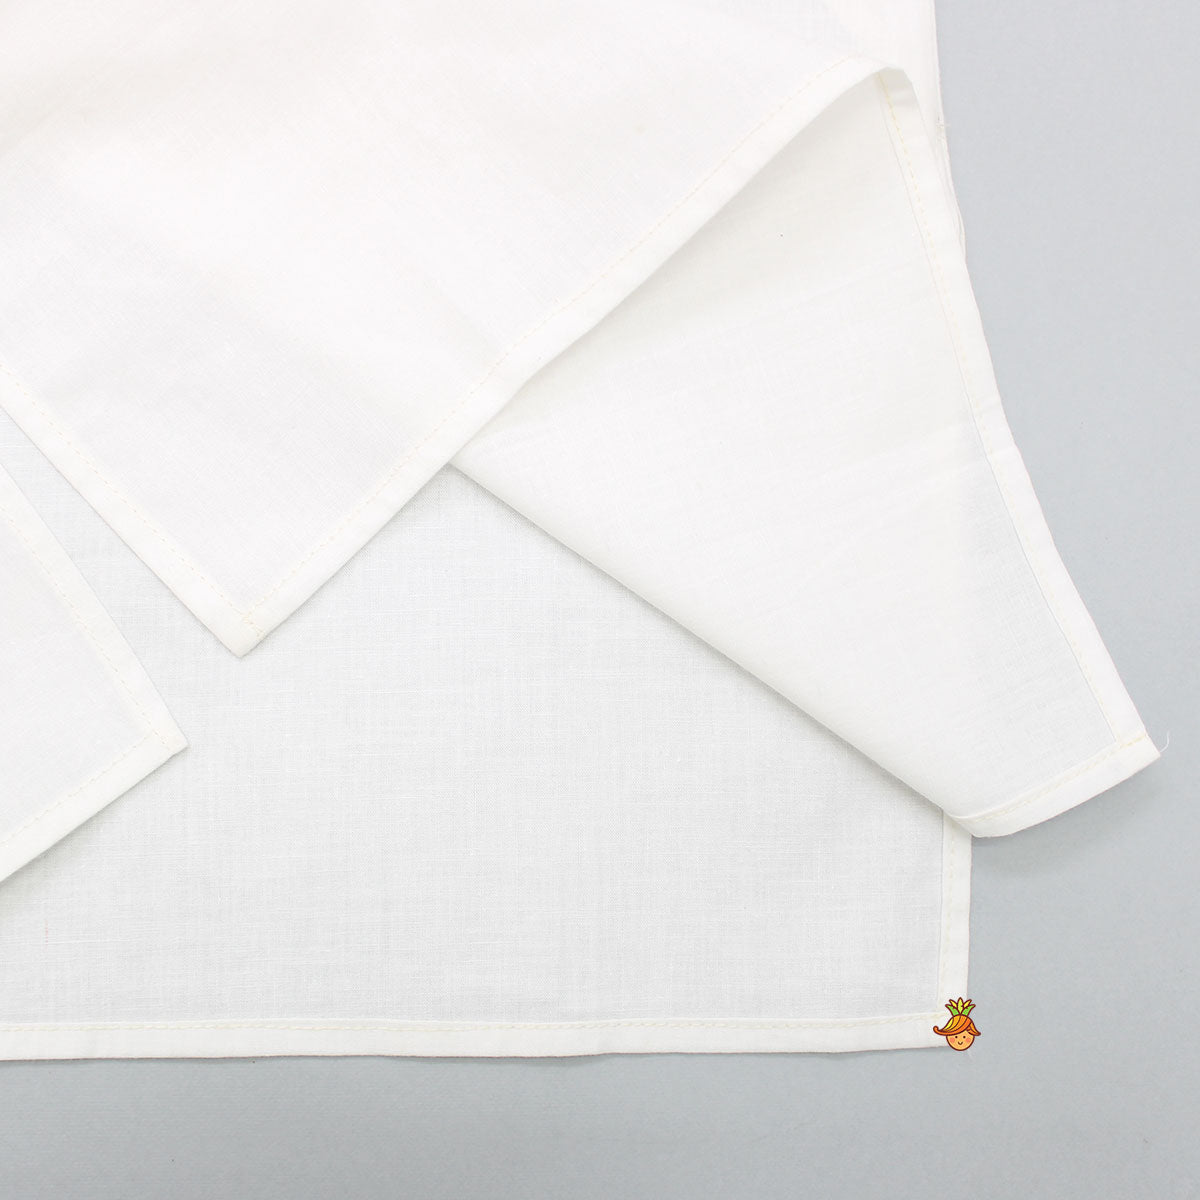 White Kurta With Asymmetric Printed Dual Tone Jacket And Pyjama